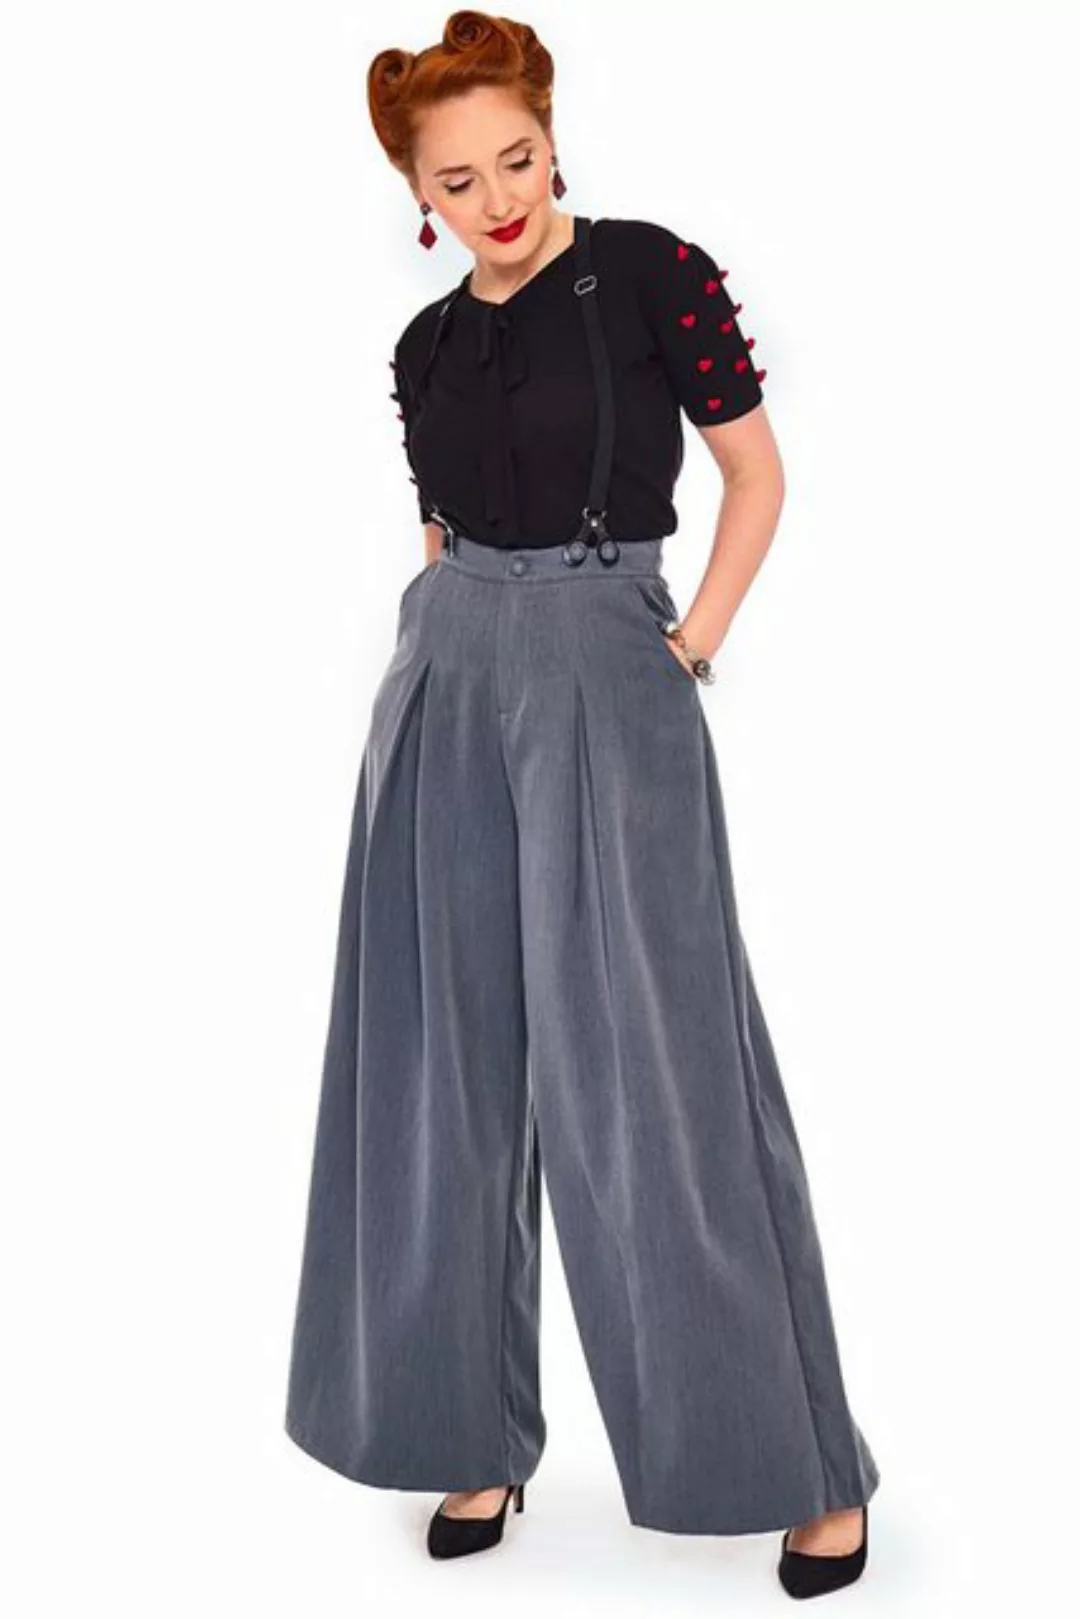 Voodoo Vixen Marlene-Hose Khloe Grey Vintage Trousers 40er Jahre Stil günstig online kaufen